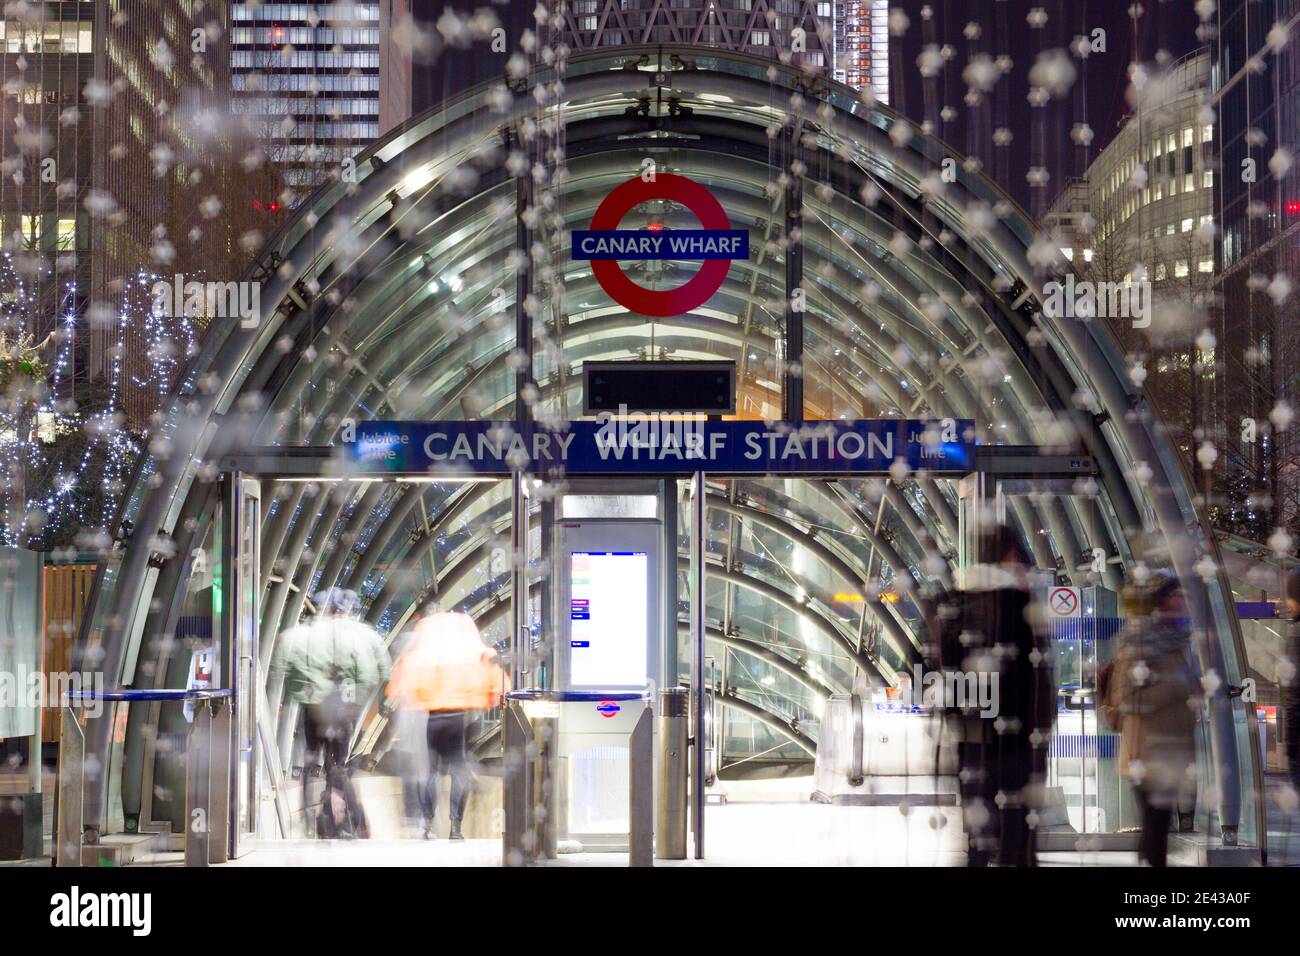 Canary wharf station under snow flakes like lighting display Stock Photo